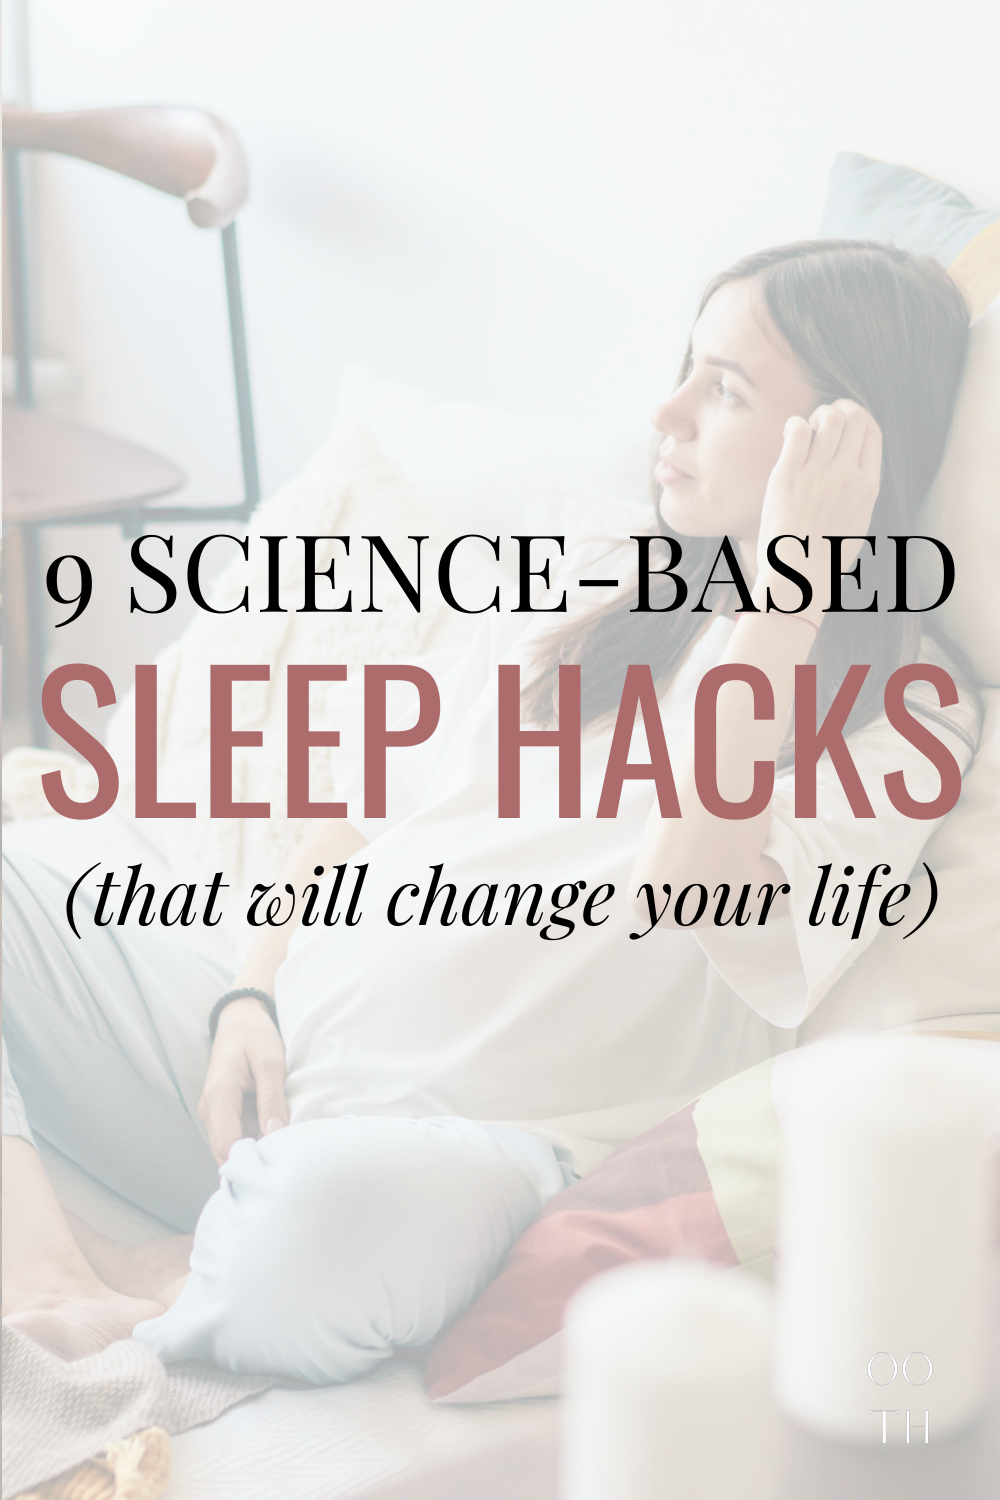  how to sleep better, how to fall asleep faster, how to naturally improve sleep, better sleep tips, fall asleep fast